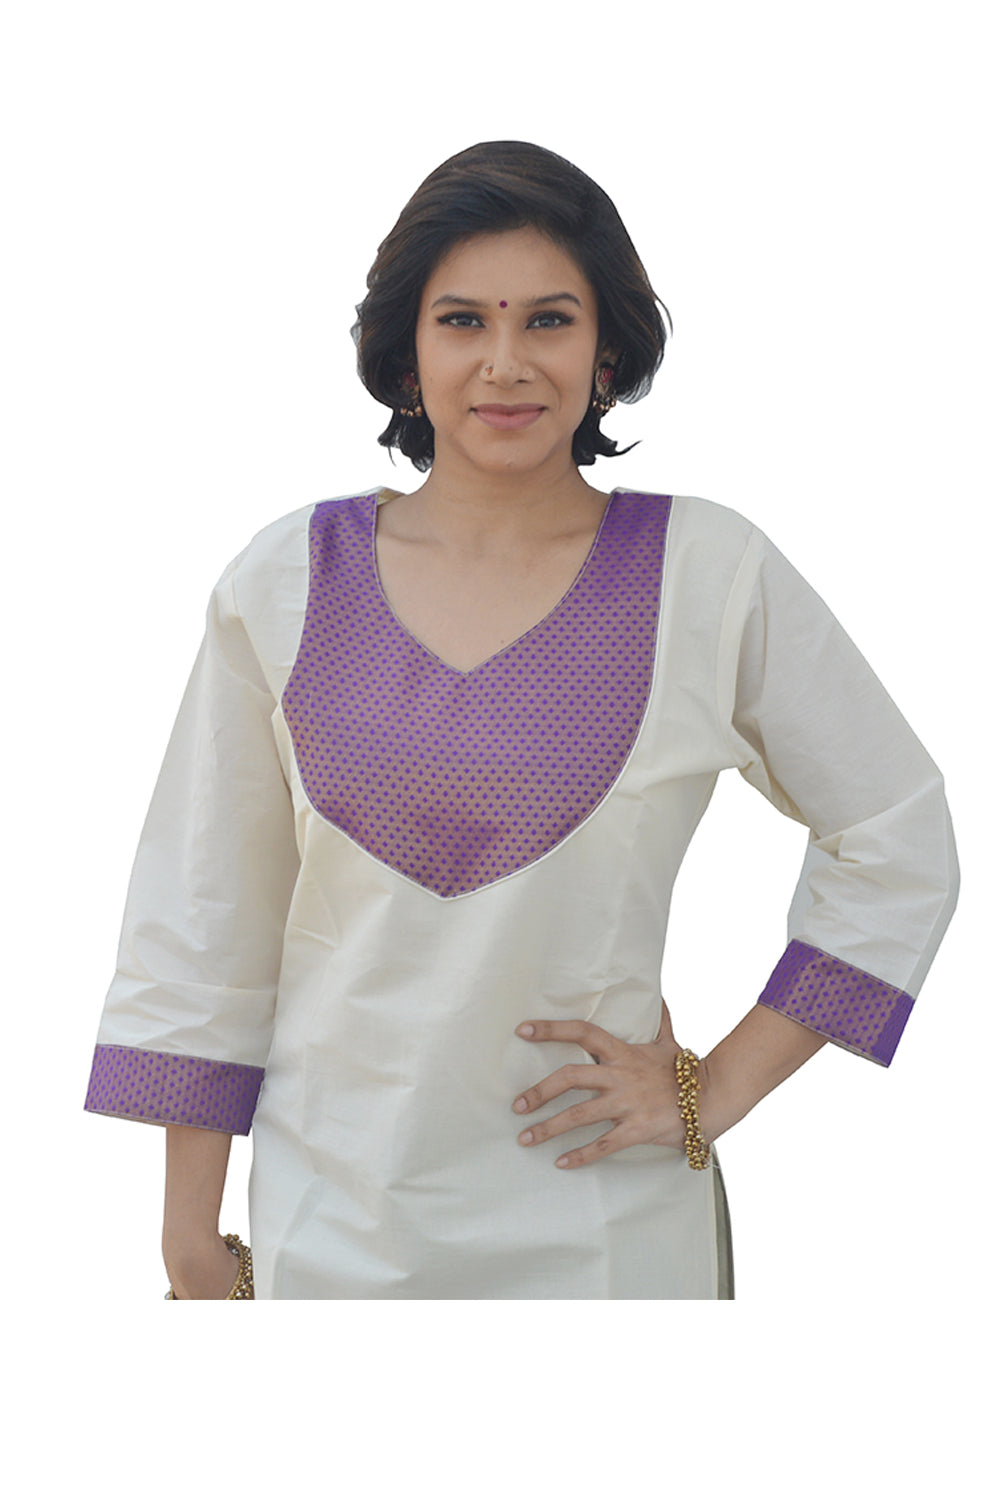 Southloom Kerala Women's Salwar / Churidar Top with Lavender Colour Design